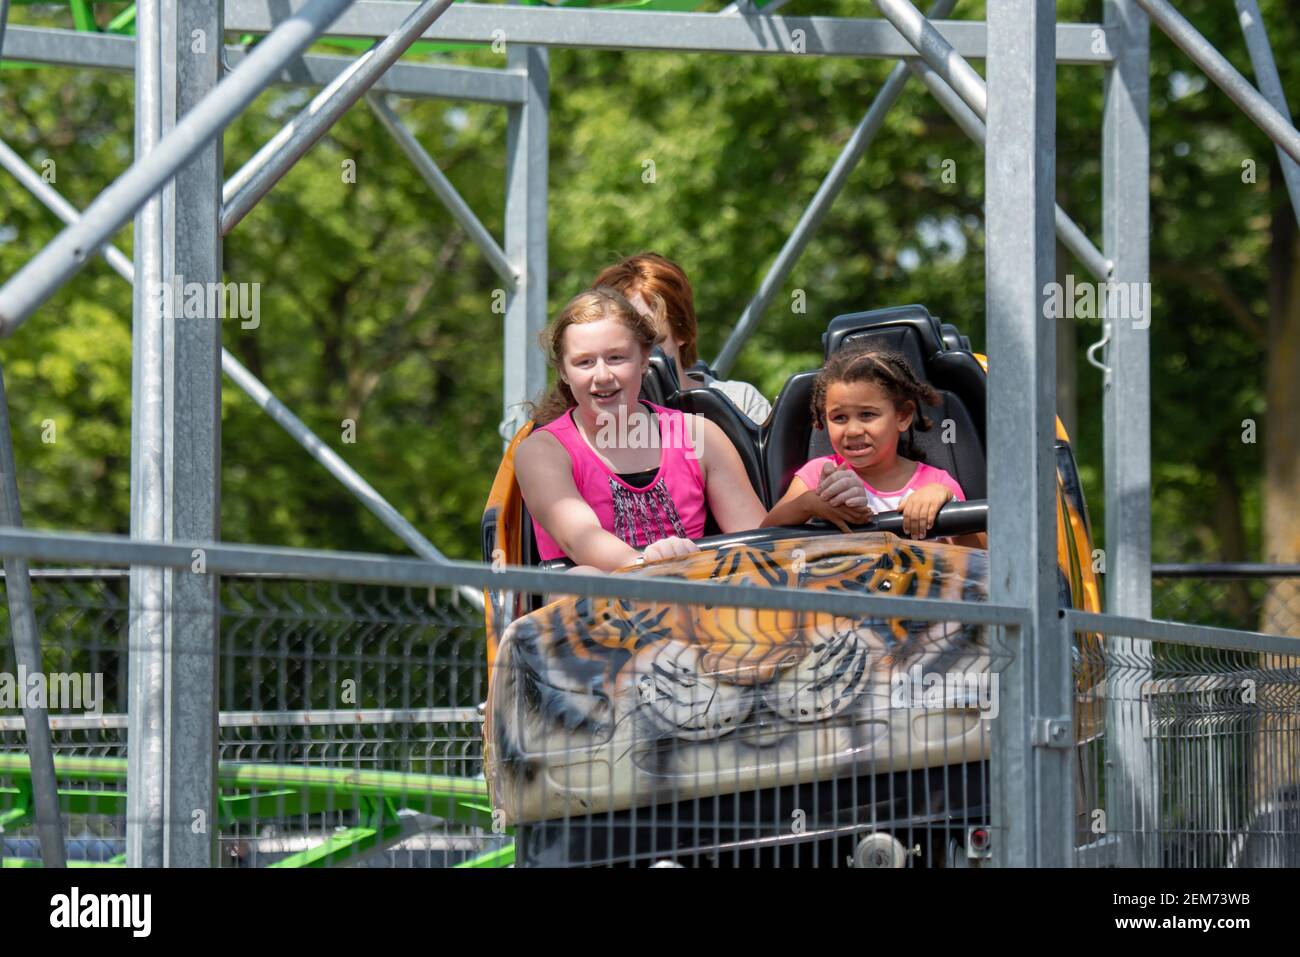 St. Paul, Minnesota.  13, 11 and 5 year old bi-racial sibling having fun on an amusement park ride. Stock Photo